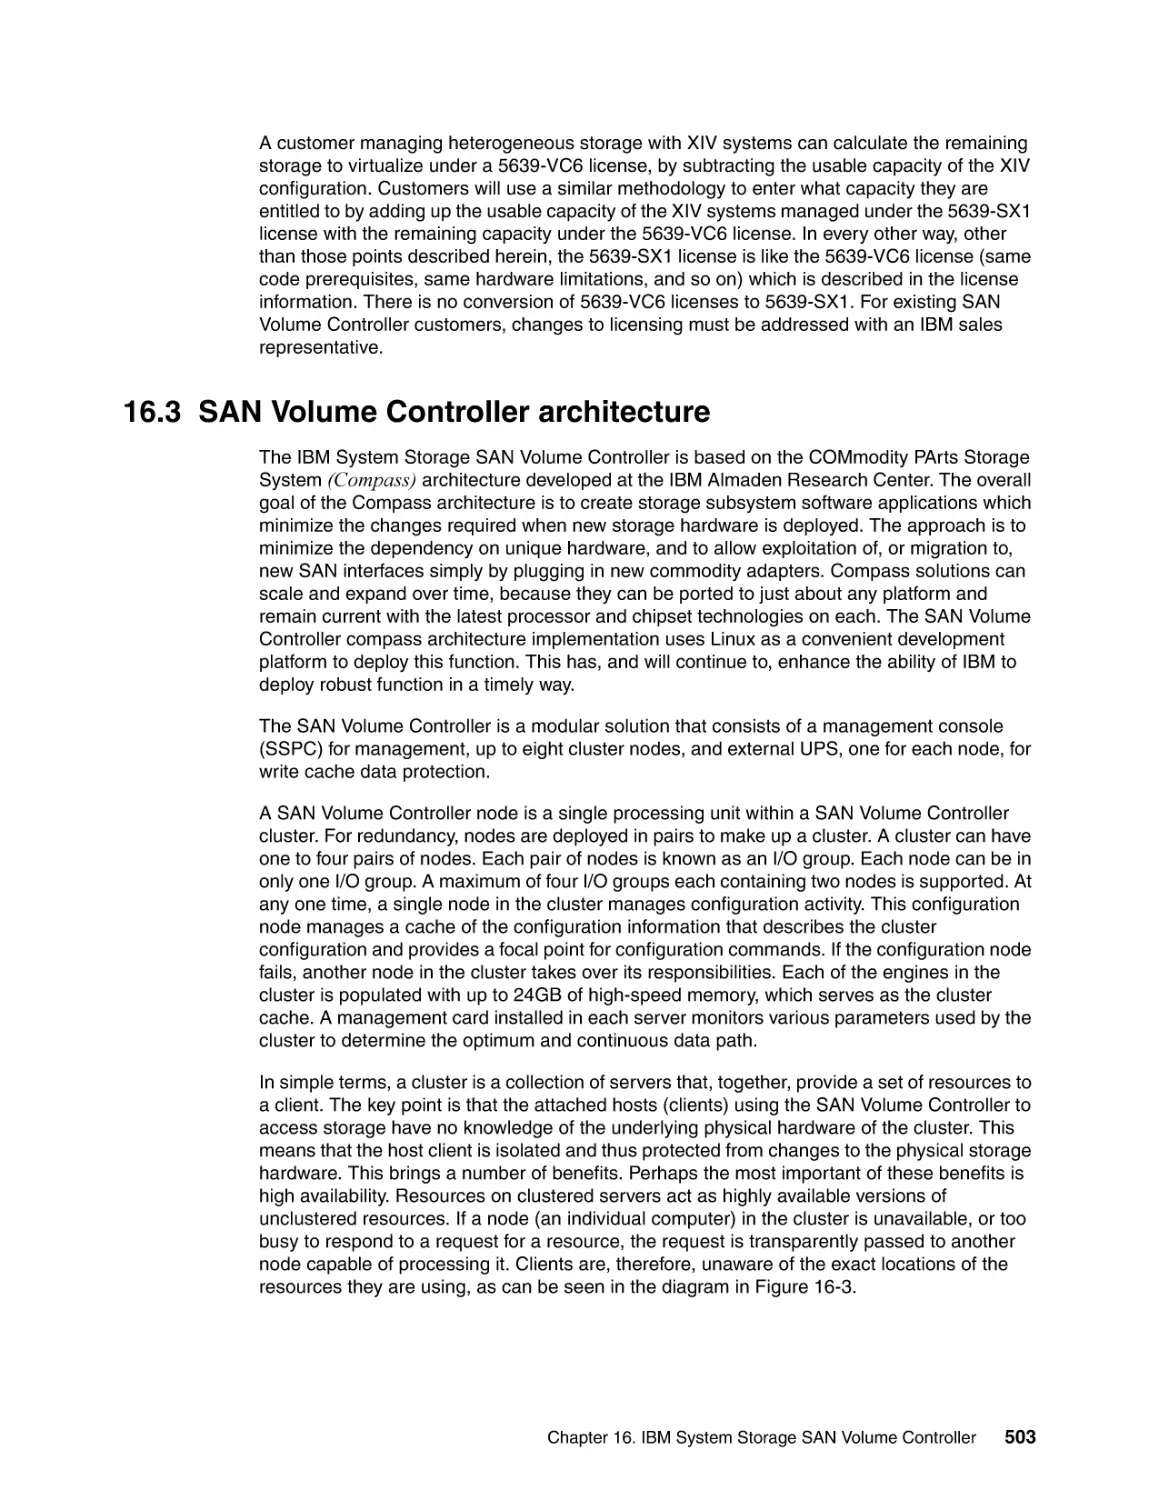 16.3 SAN Volume Controller architecture